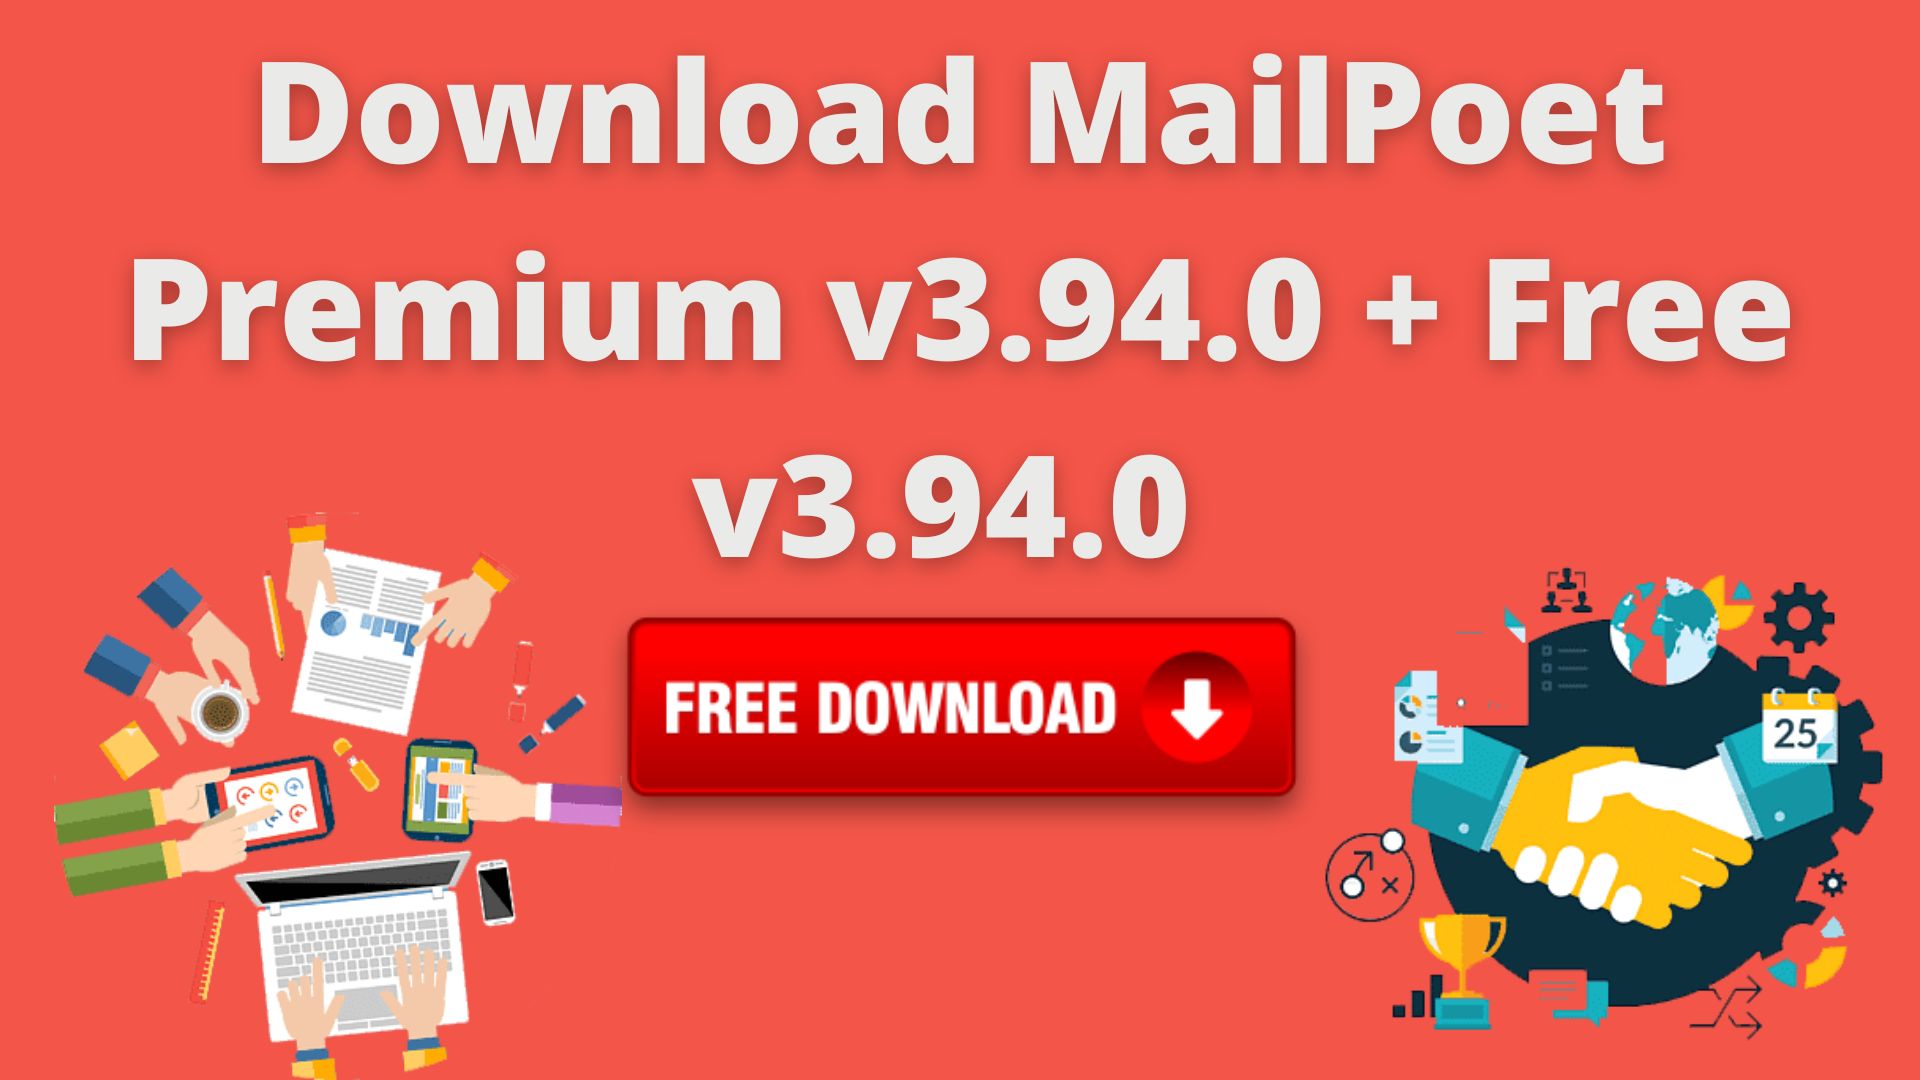 Download mailpoet premium v3. 94. 0 + free v3. 94. 0